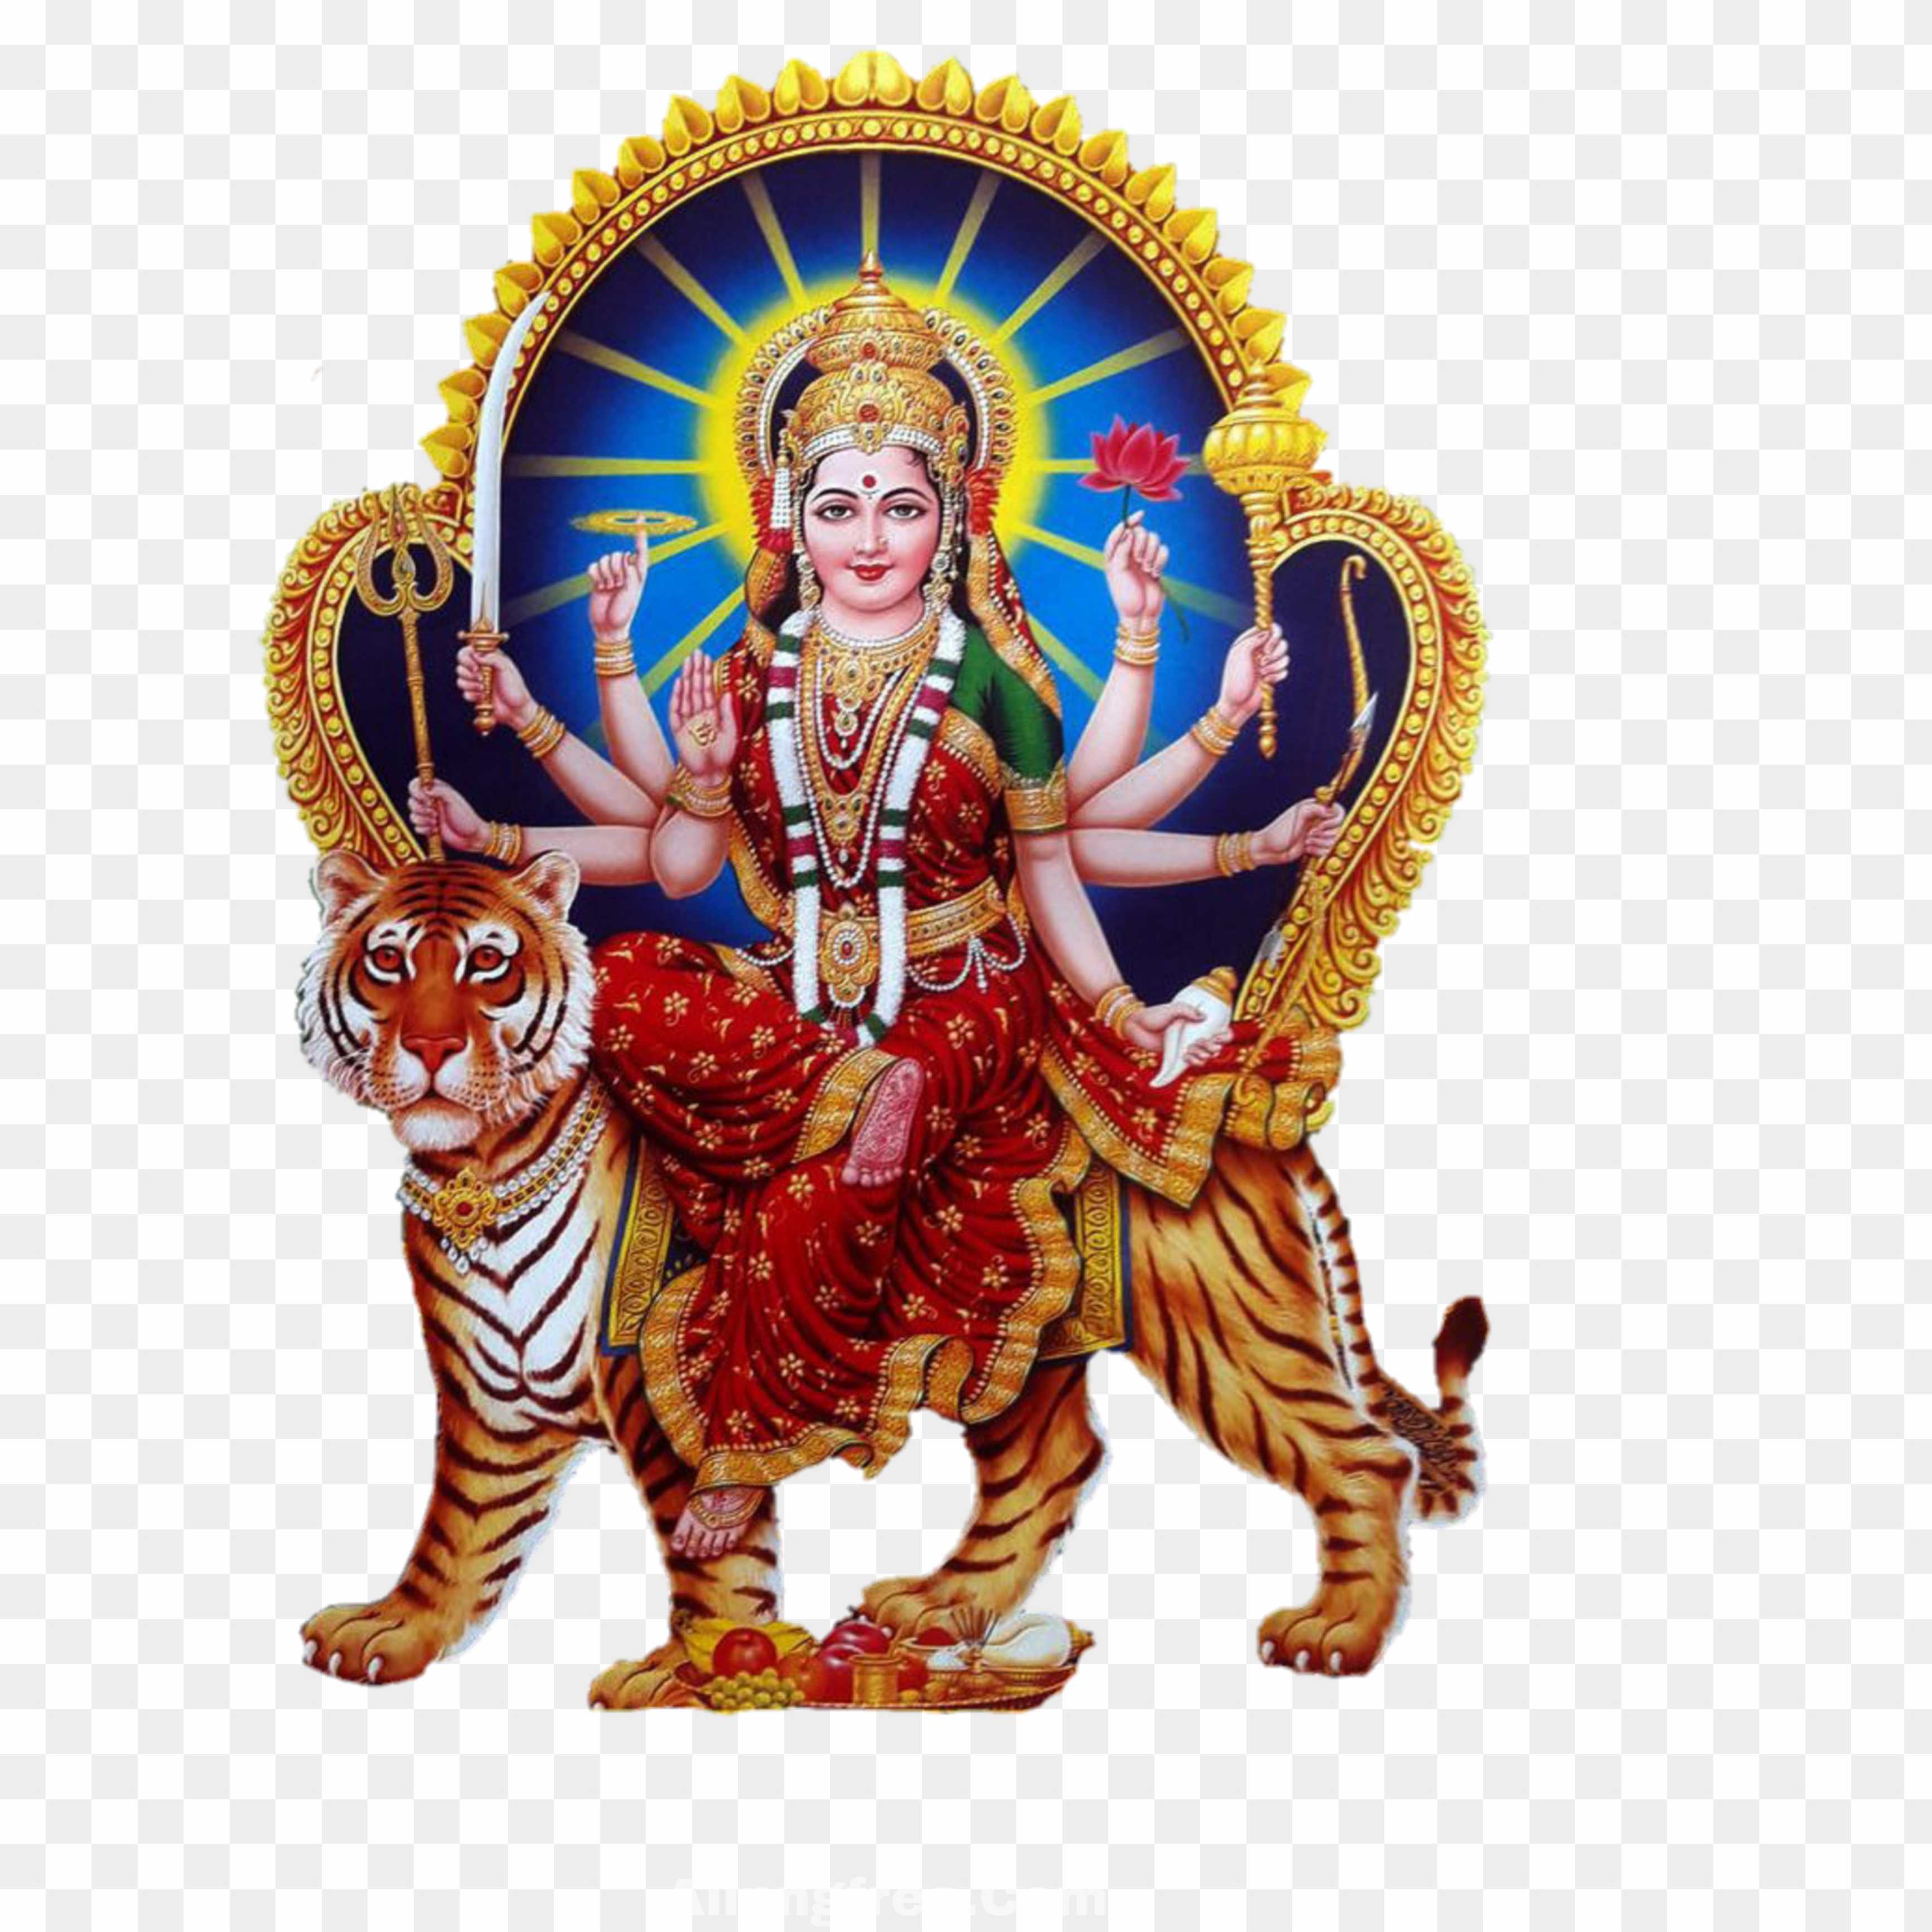 Durga ji png 